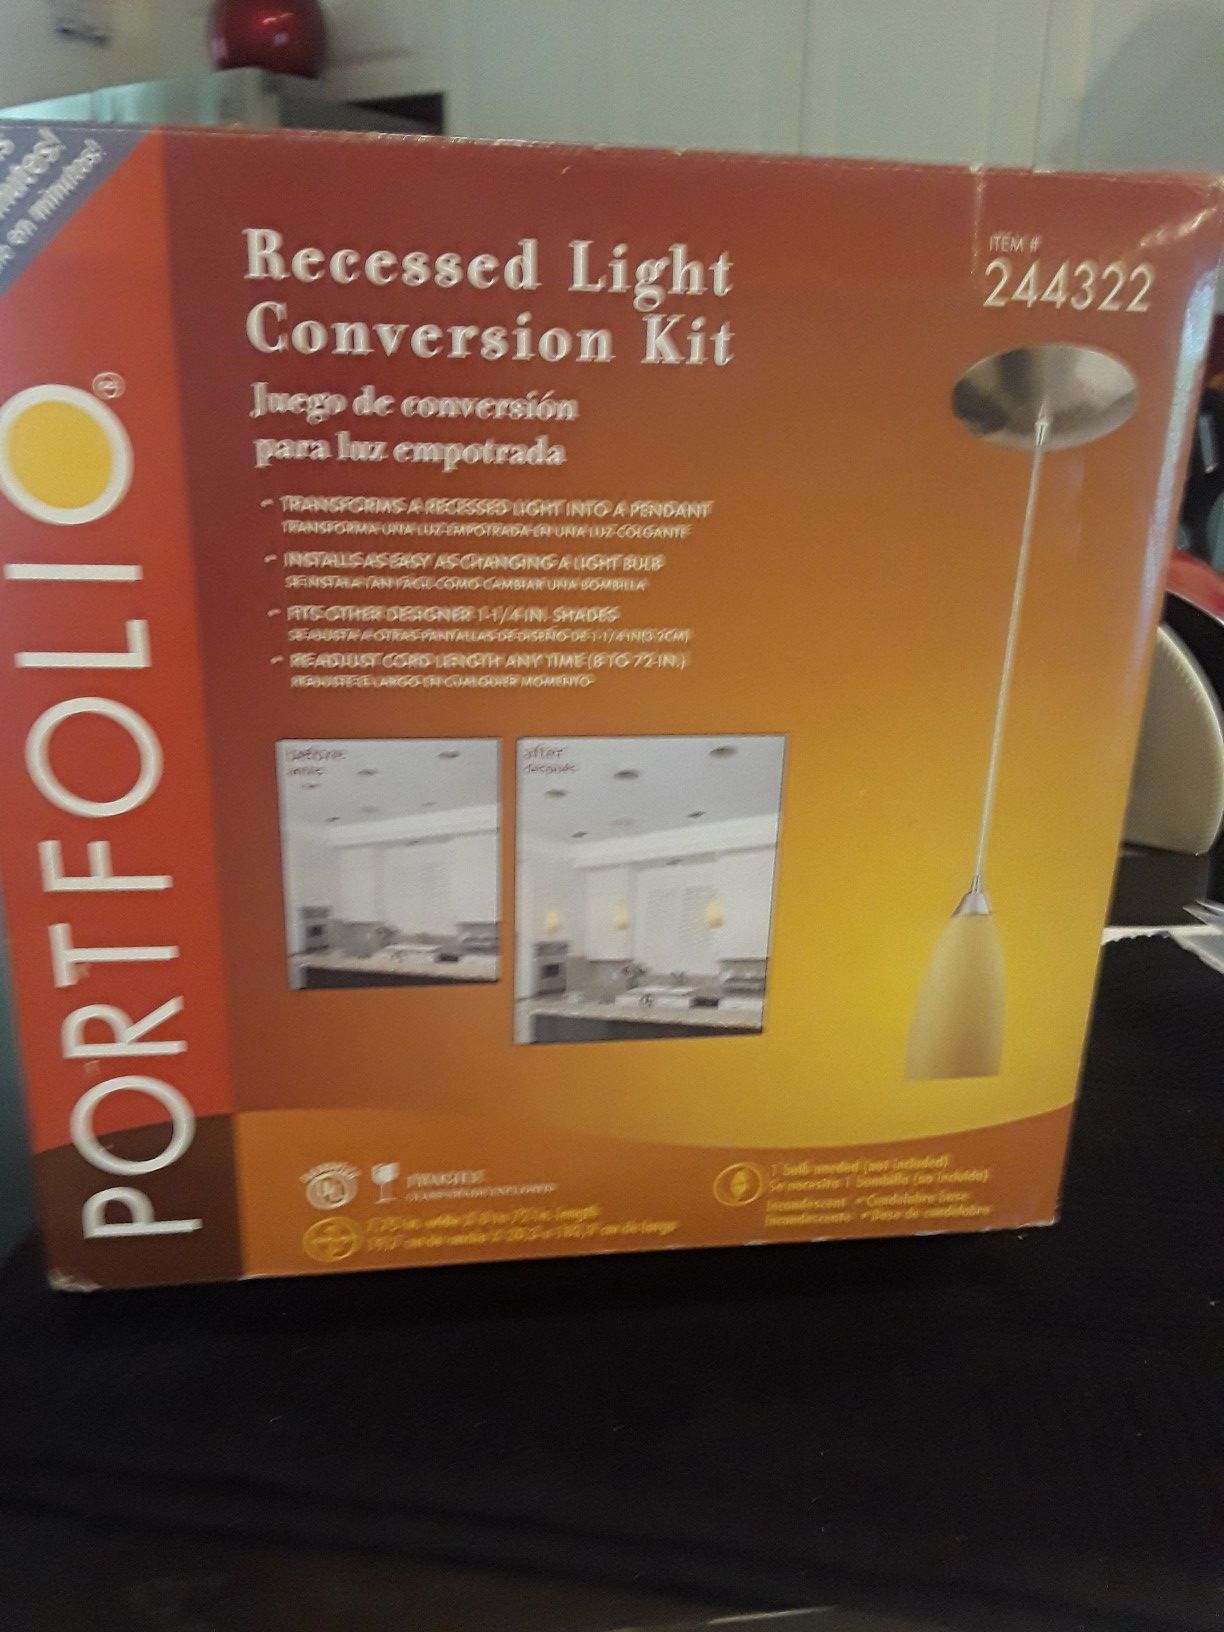 Set of 2 newPortfolio recessed light conversion kit